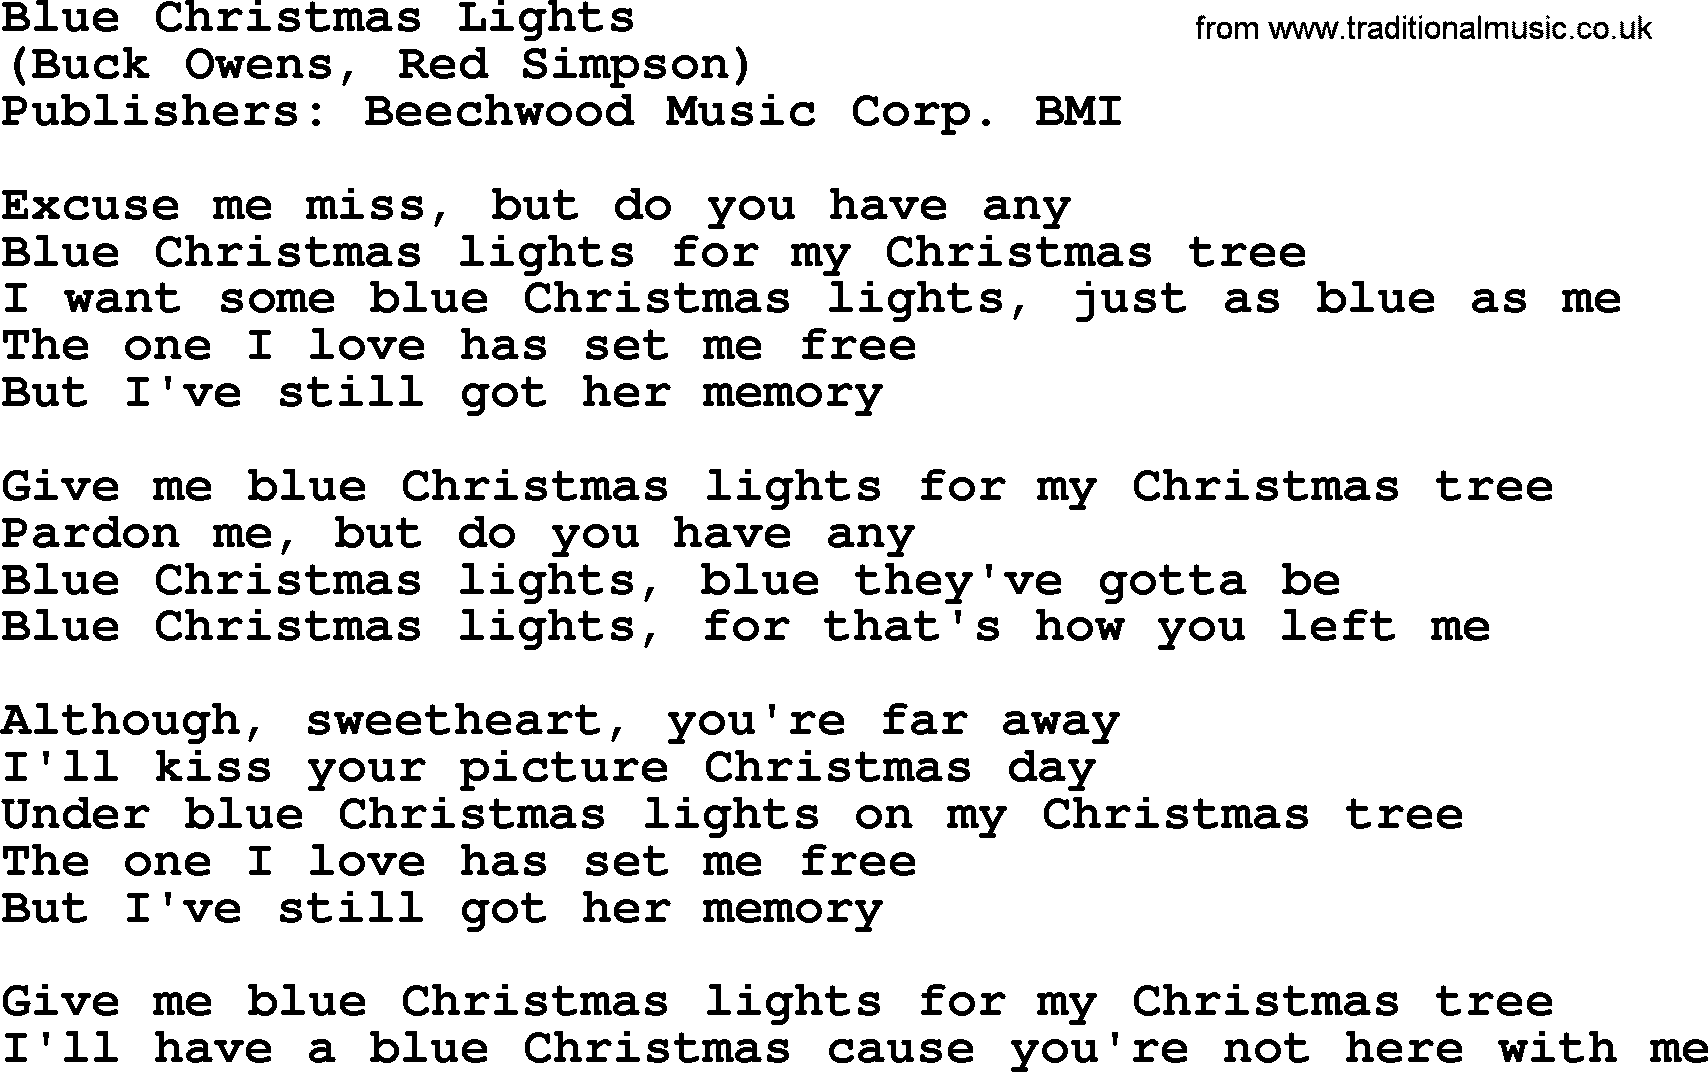 The Byrds song Blue Christmas Lights, lyrics